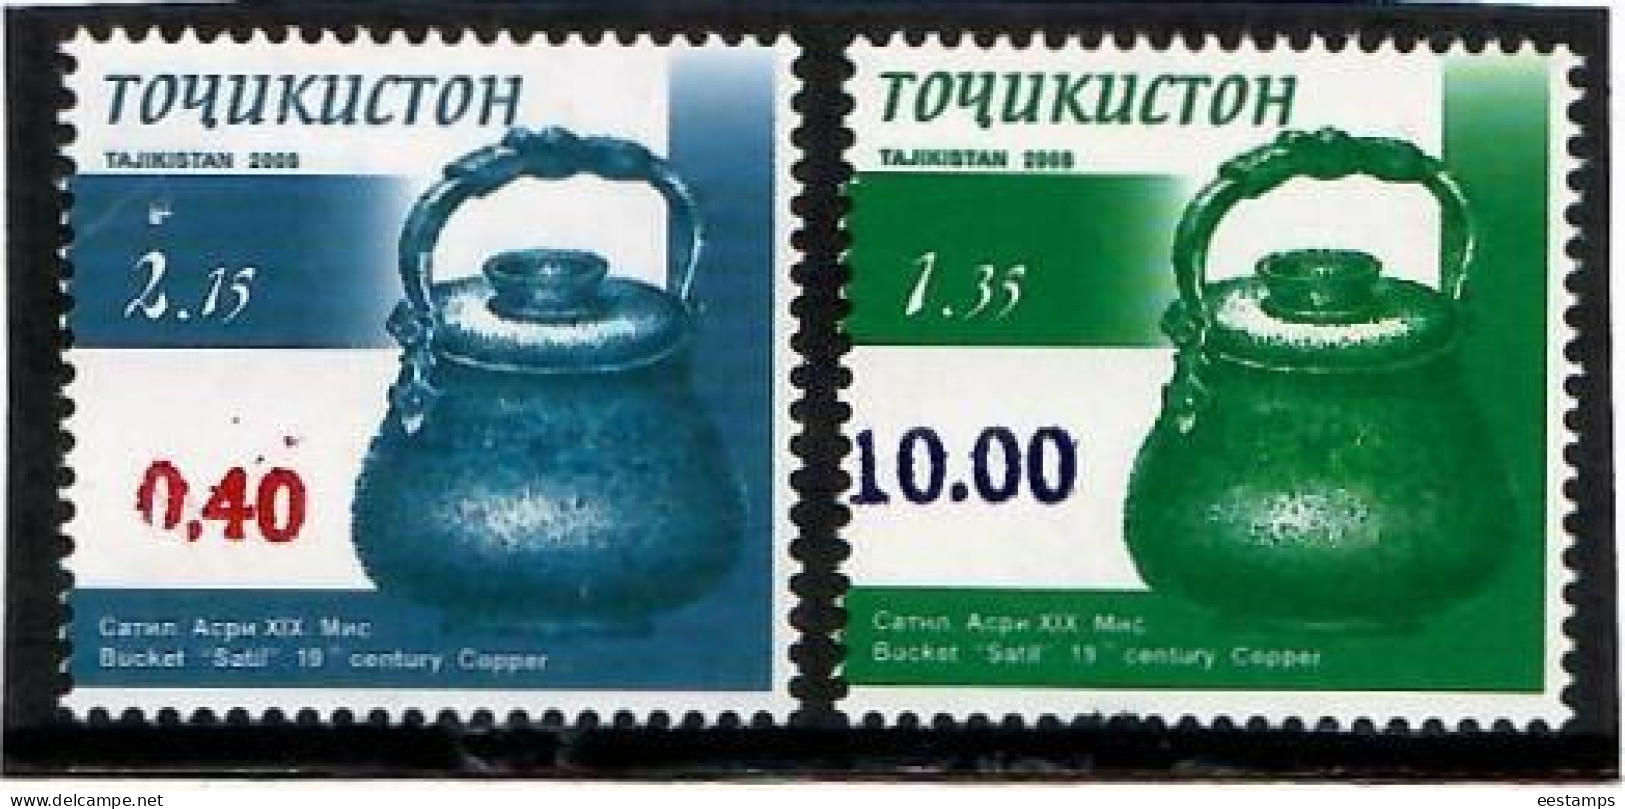 Tajikistan 2021 . Ovpt 0.40, 10.00 On Cooking Copper Of 2008 (Trial Stamps) . 2 - Tadjikistan